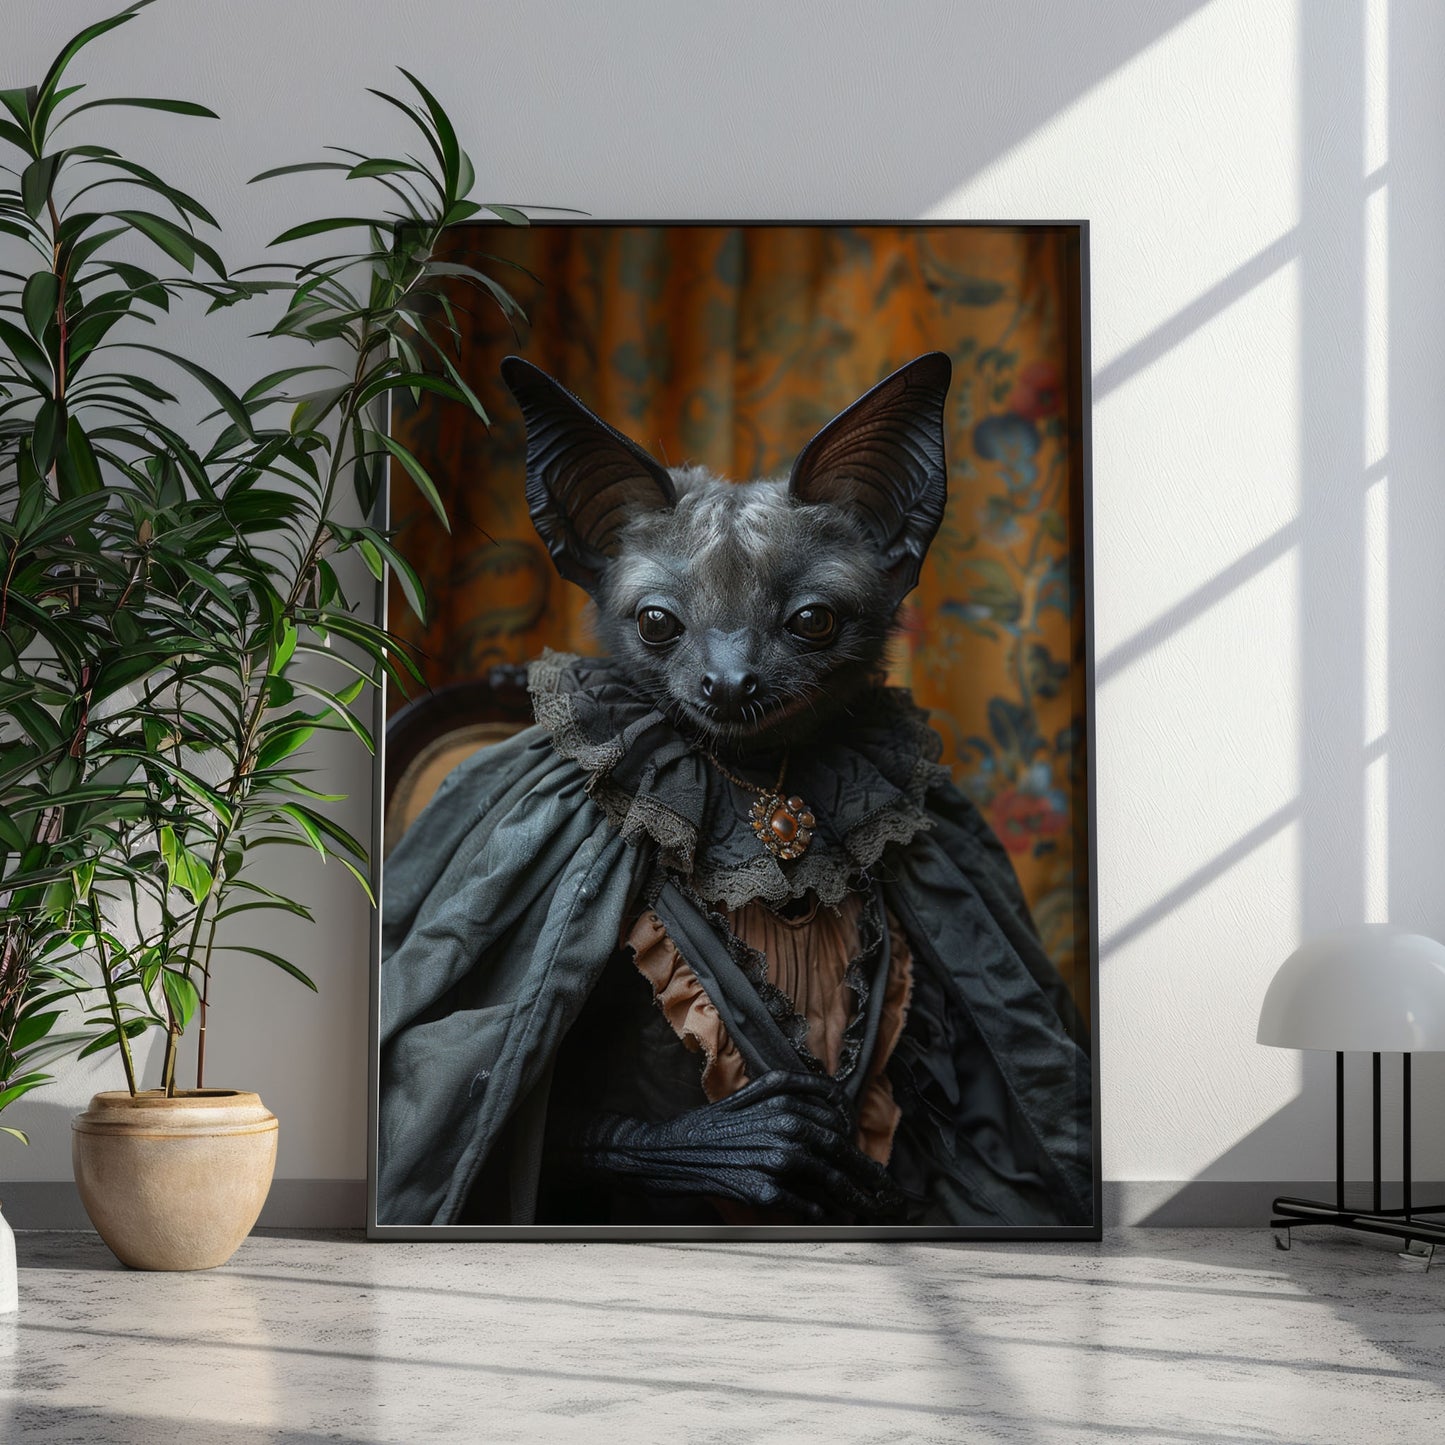 Elegant Gothic Bat Portrait - Dark Aesthetic Wall Art Poster